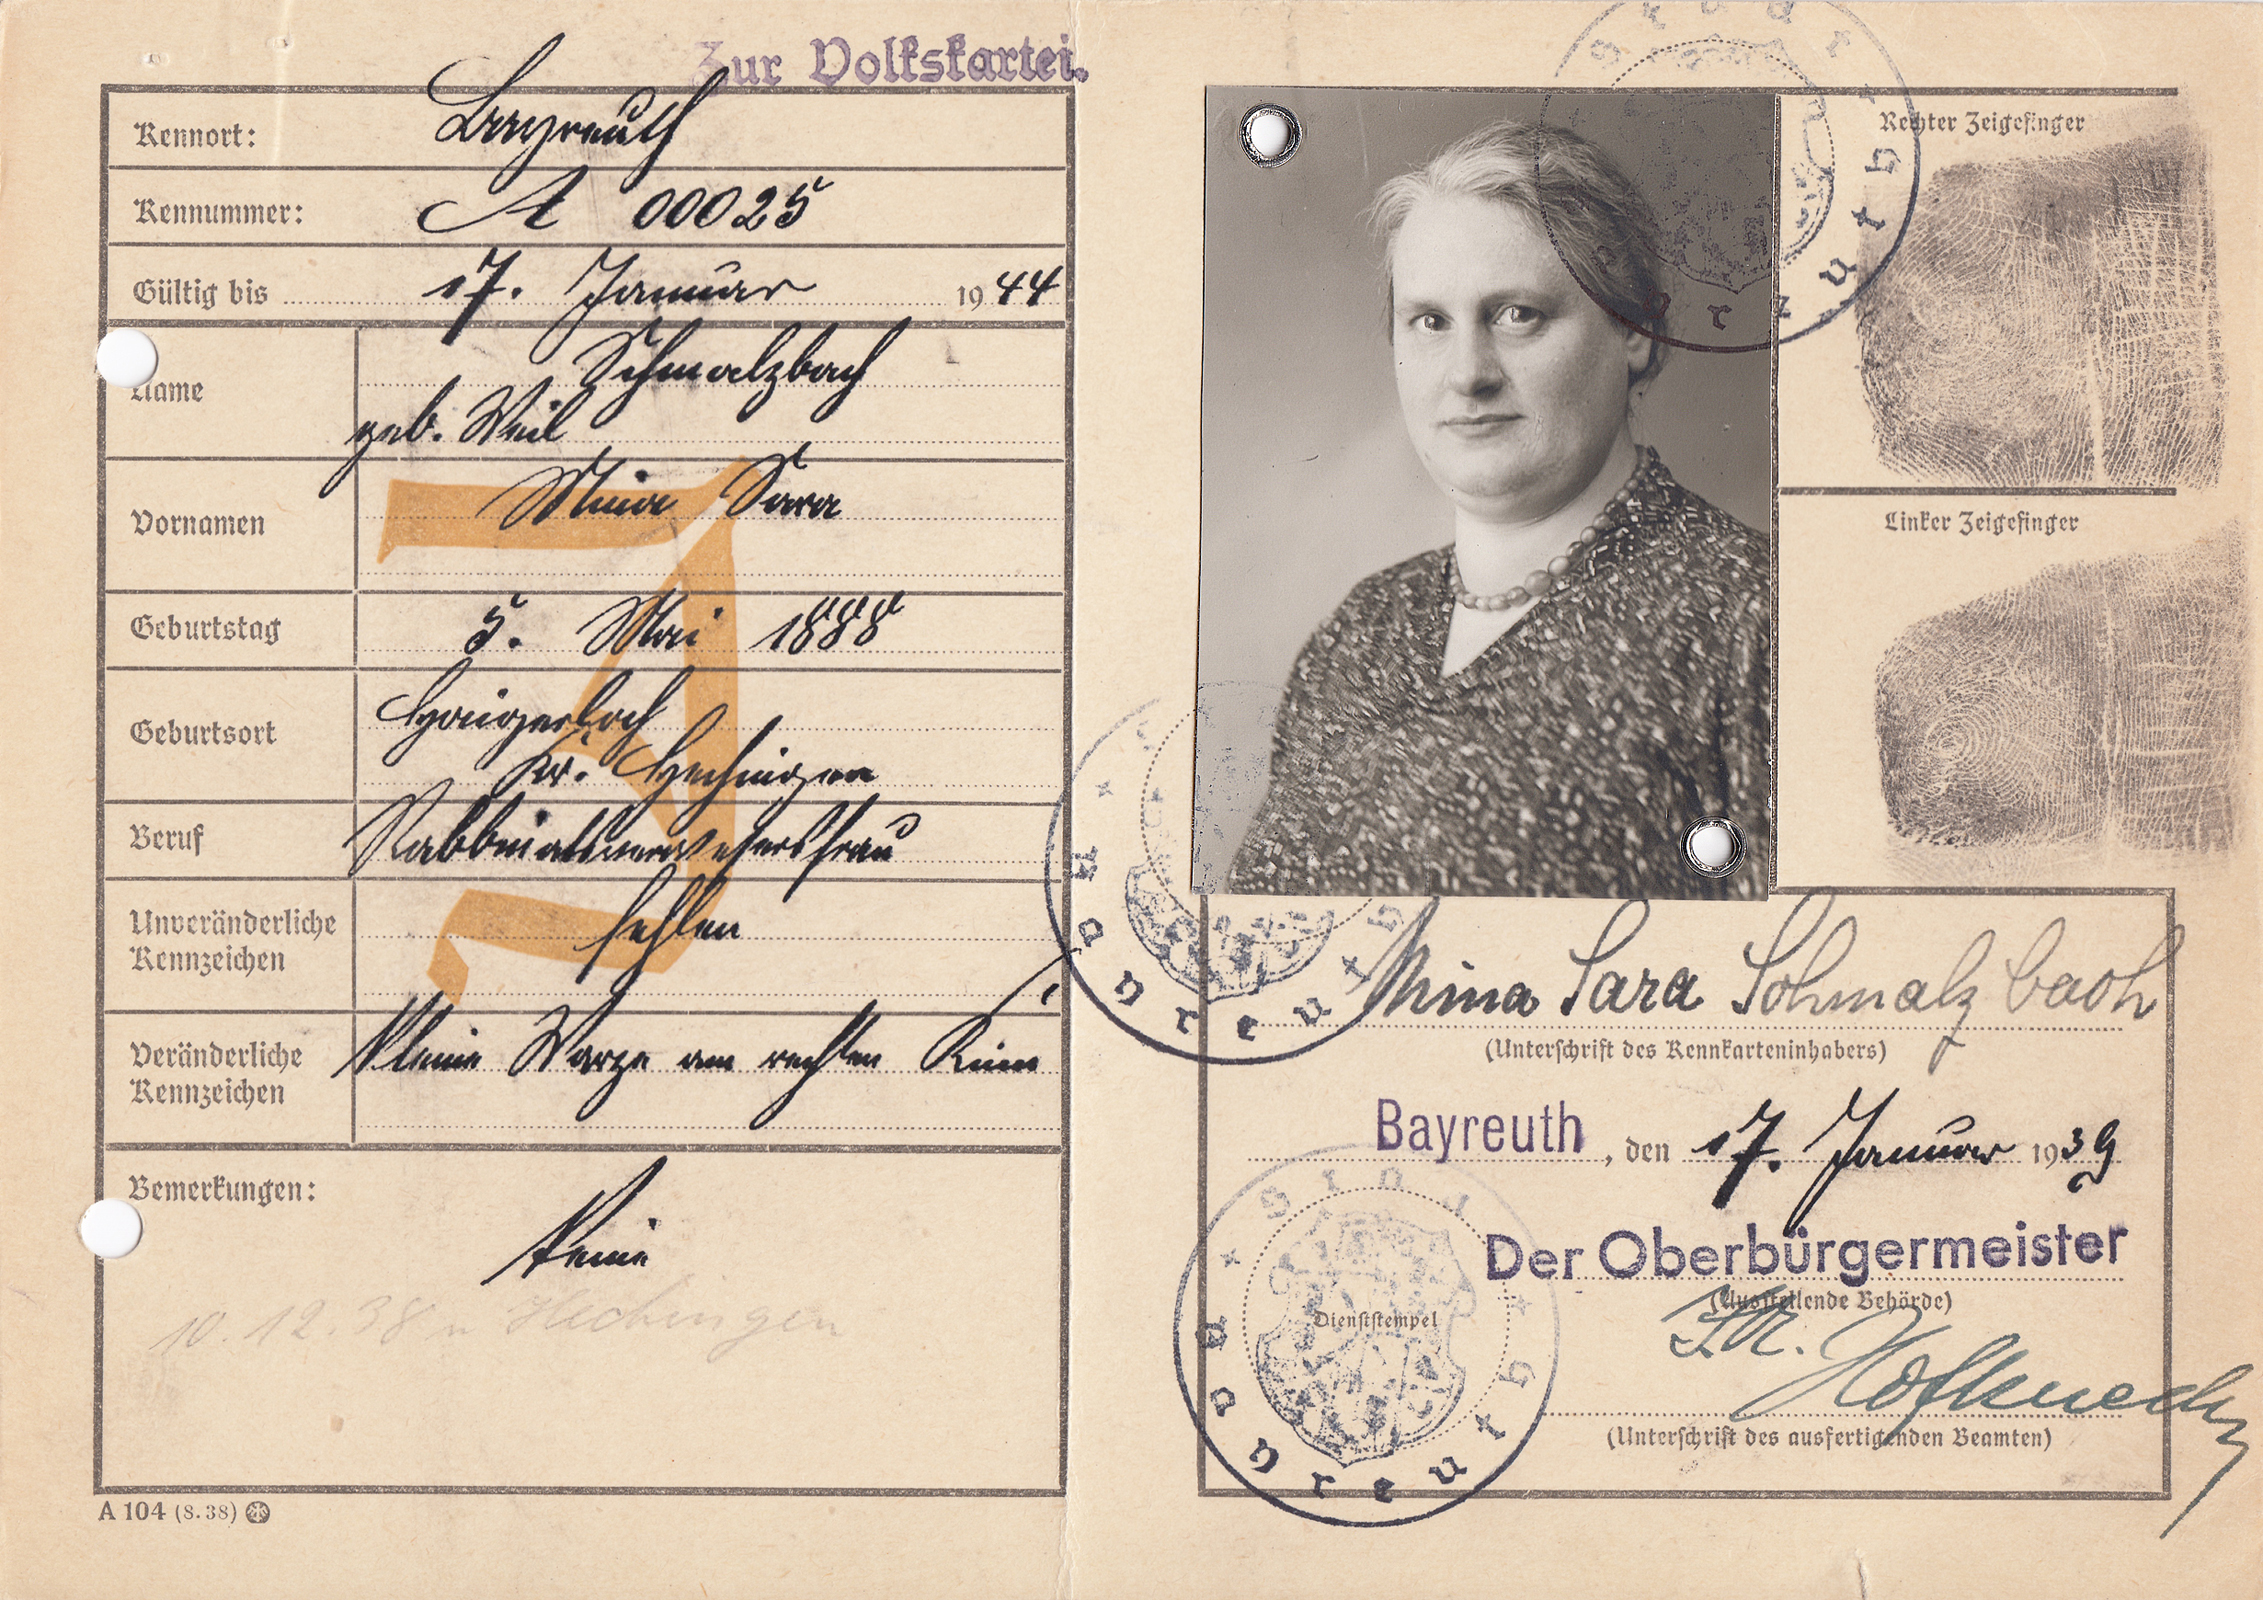 Identification card for Mina Schmalzbach.